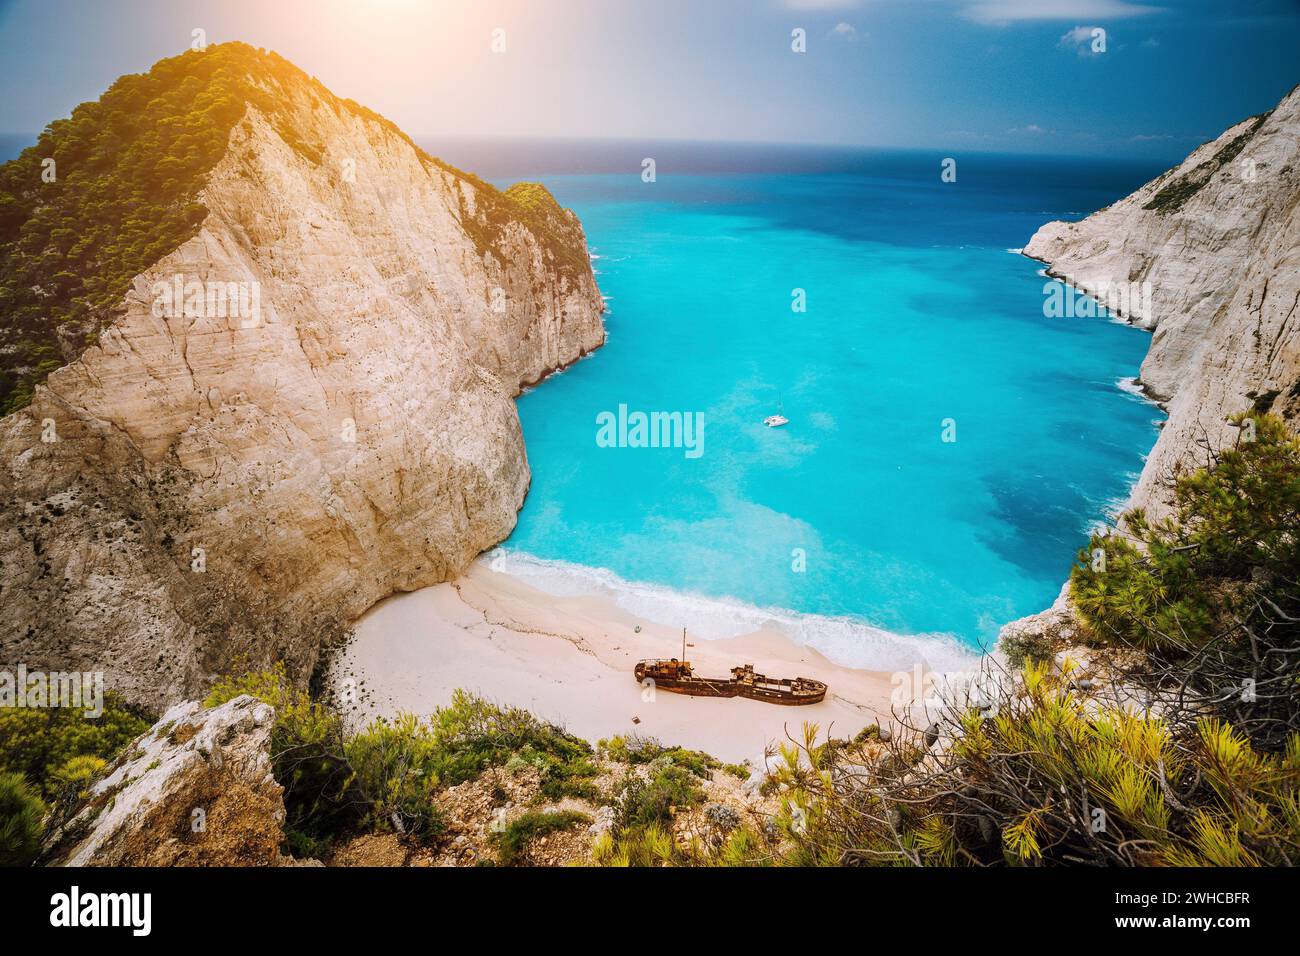 Shipwreck on Navagio beach. Azure turquoise sea water and paradise like sandy beach. Famous tourist landmark on Zakynthos island, Greece. Stock Photo